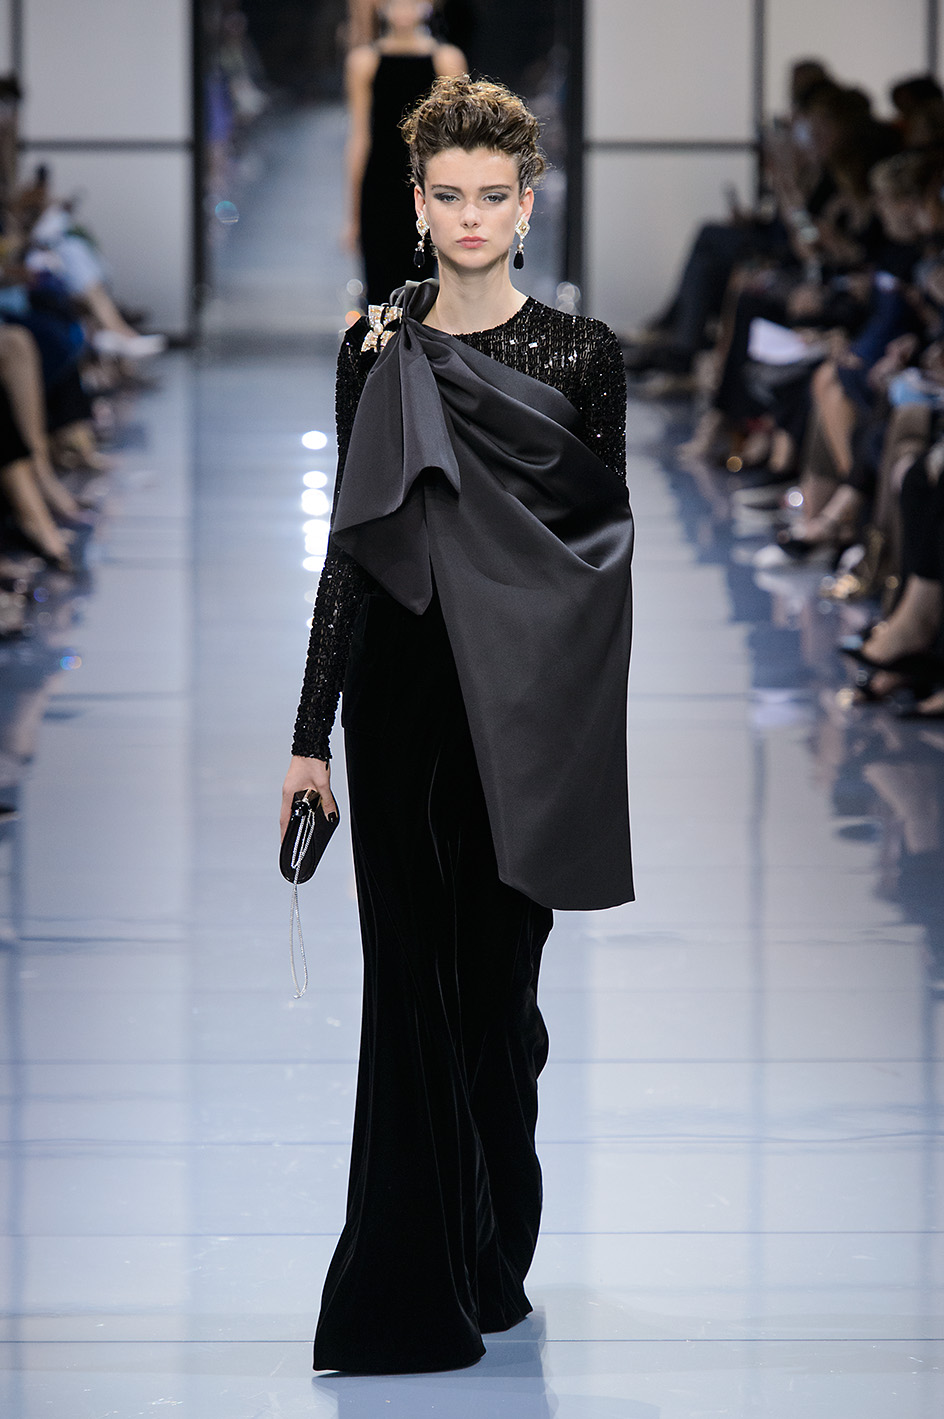 Paris Haute Couture AW 2016-2017

Armani Privè